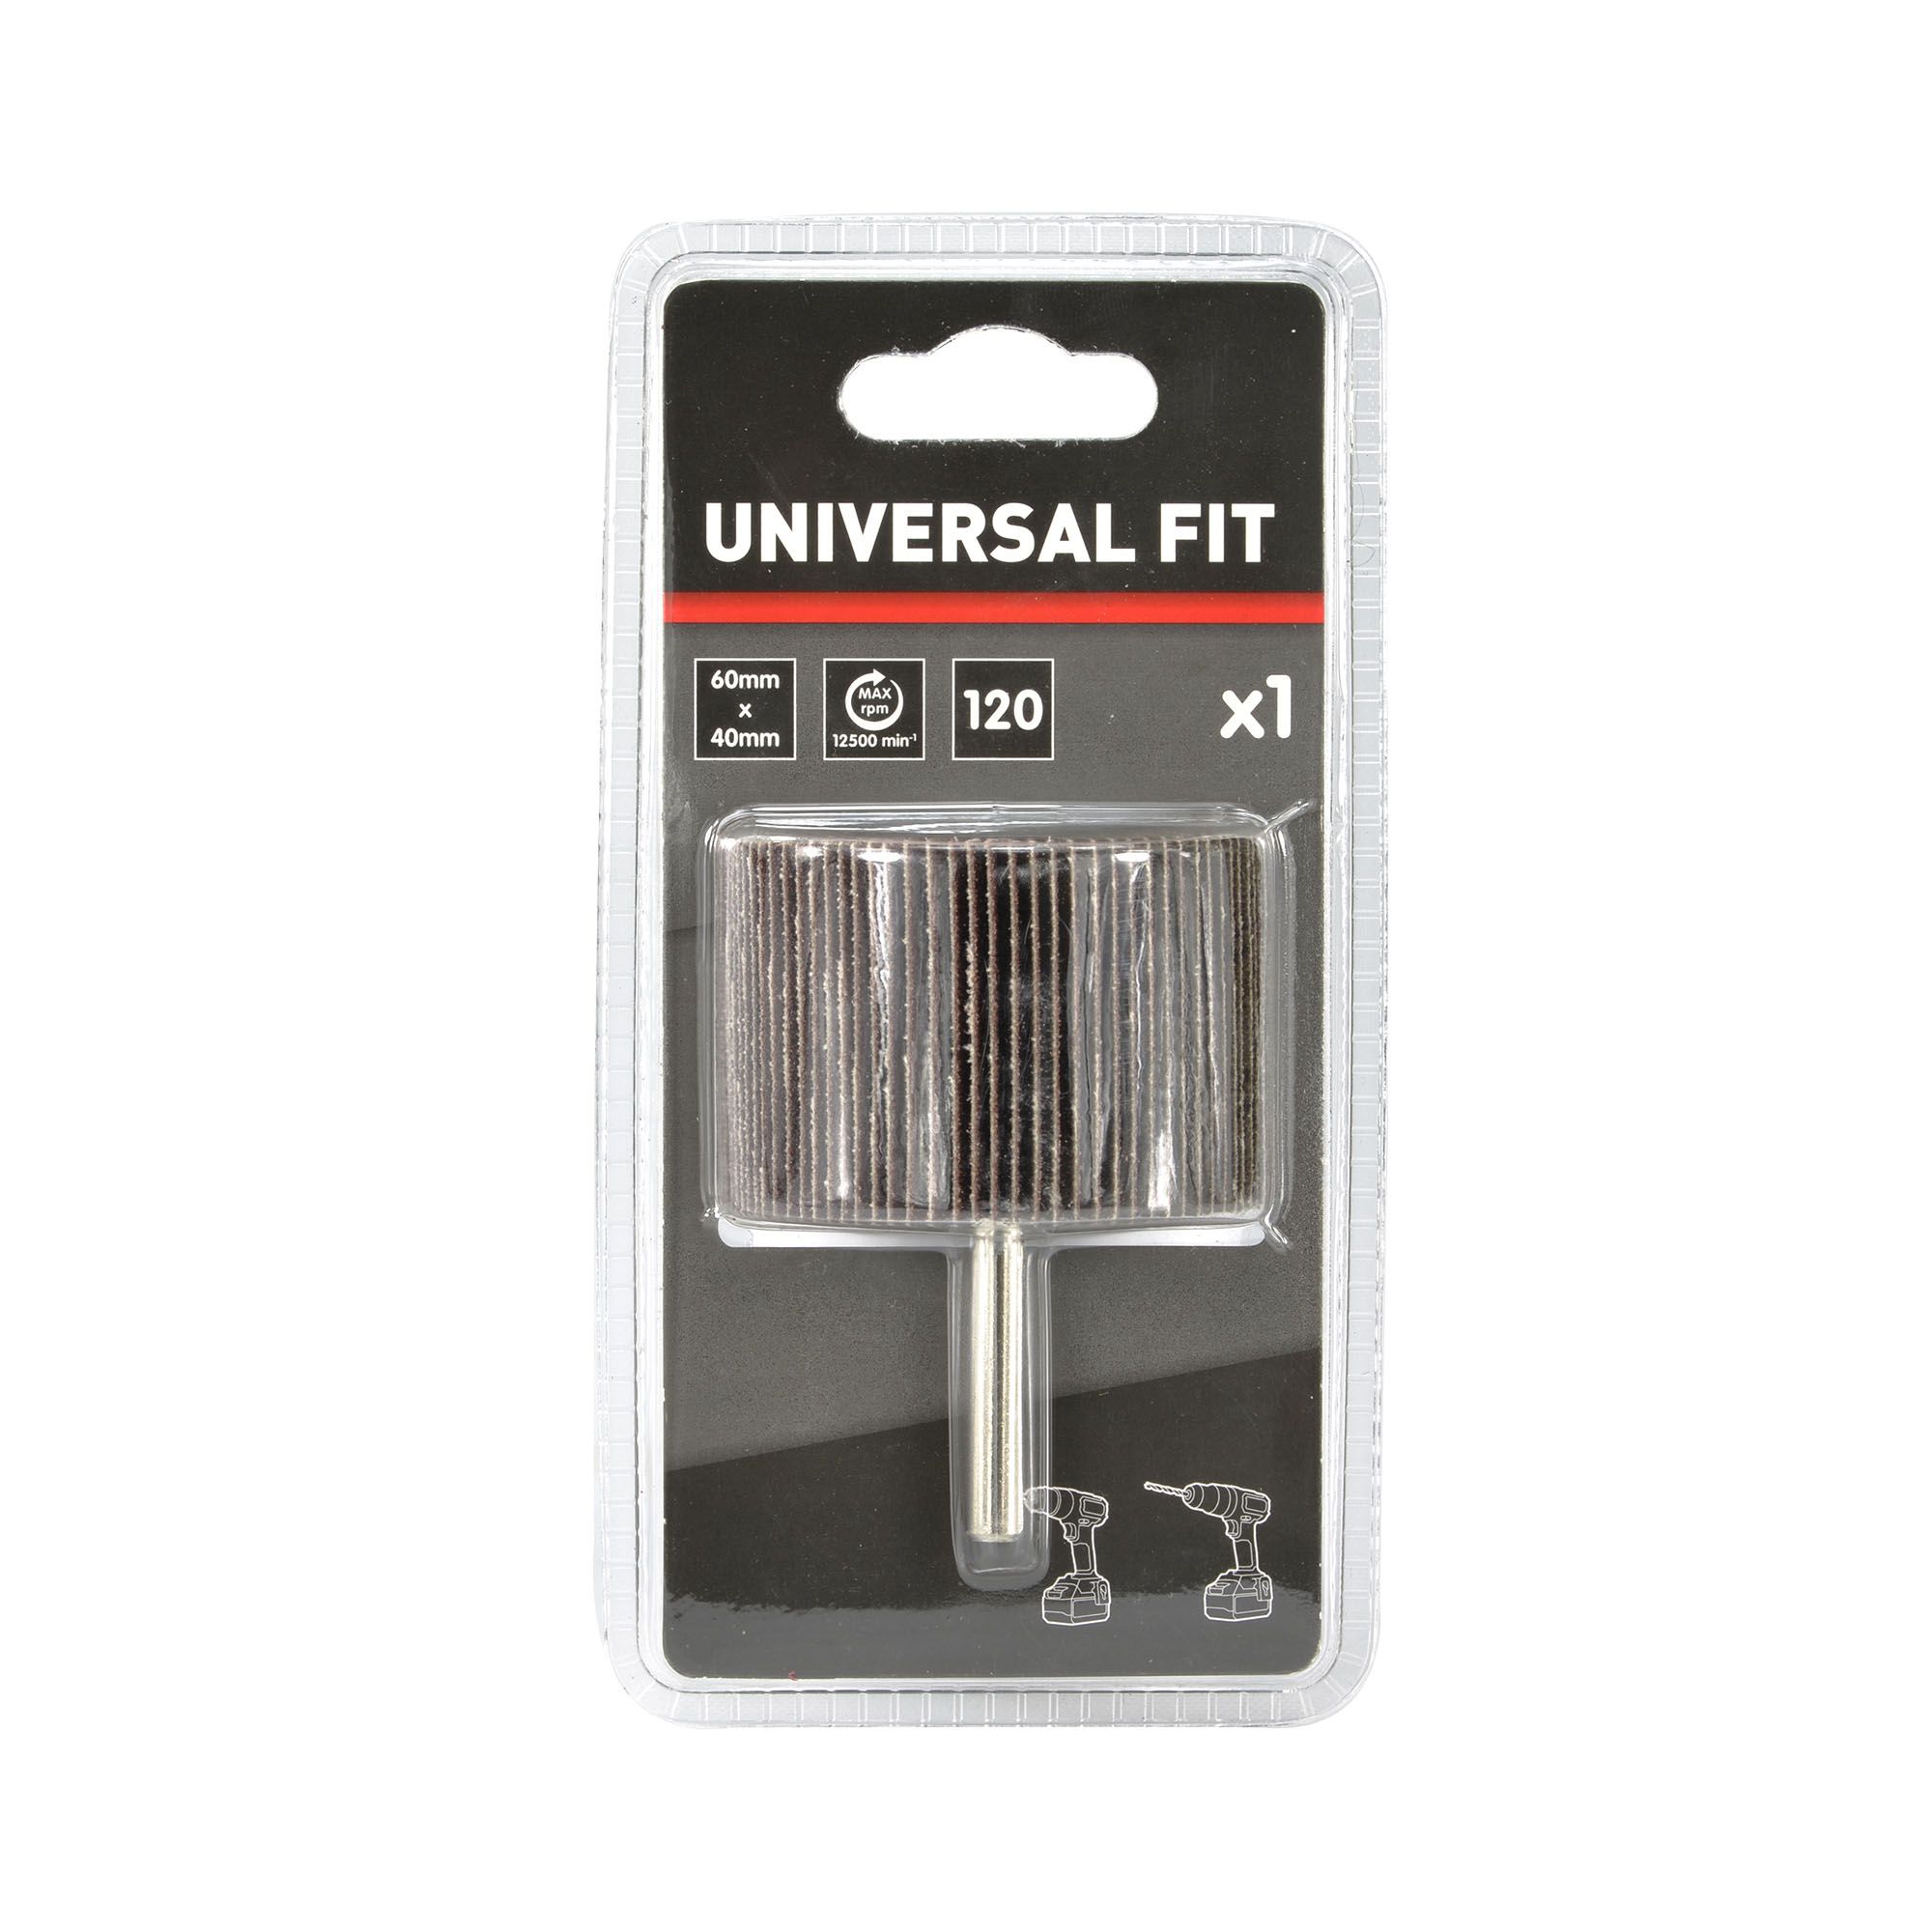 Universal Fit 120 grit Flap wheel (Dia)60mm